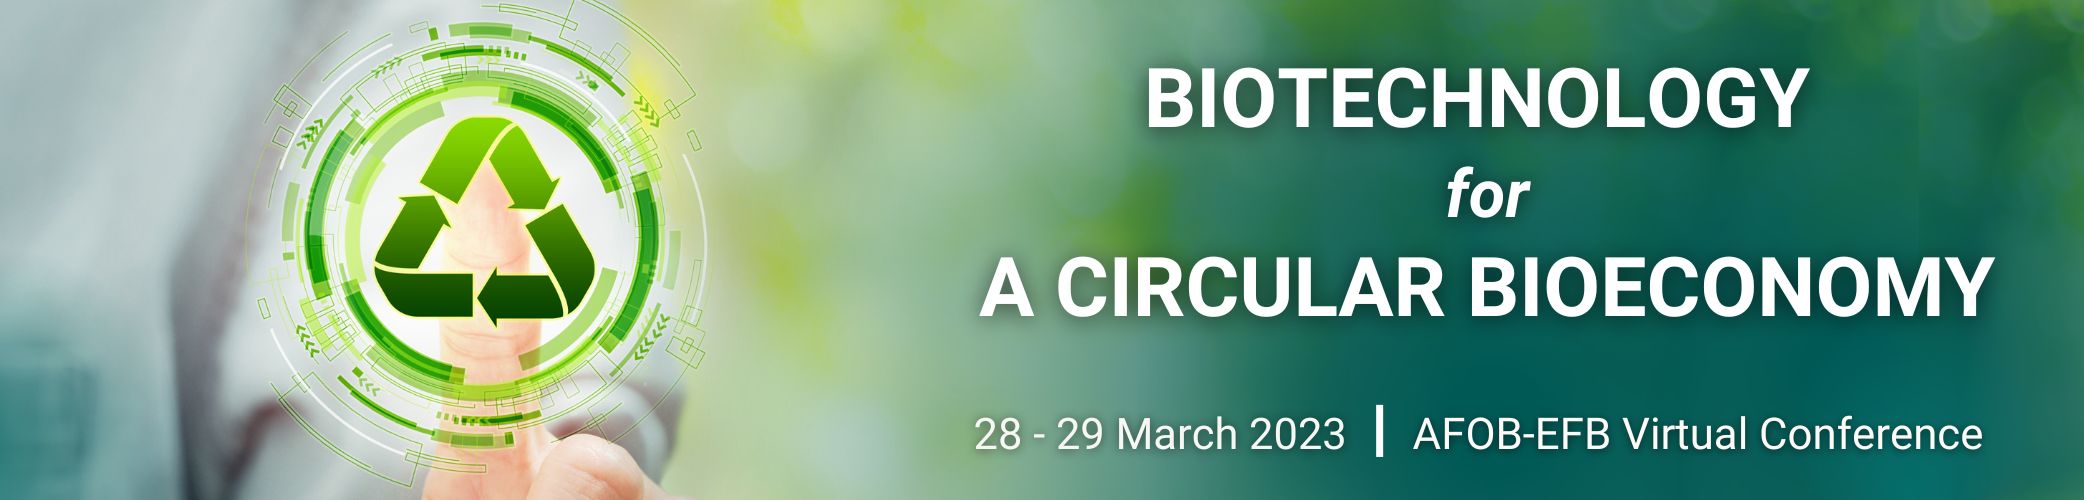 Circular Bioeconomy - 29 - 28 March 2023 Online